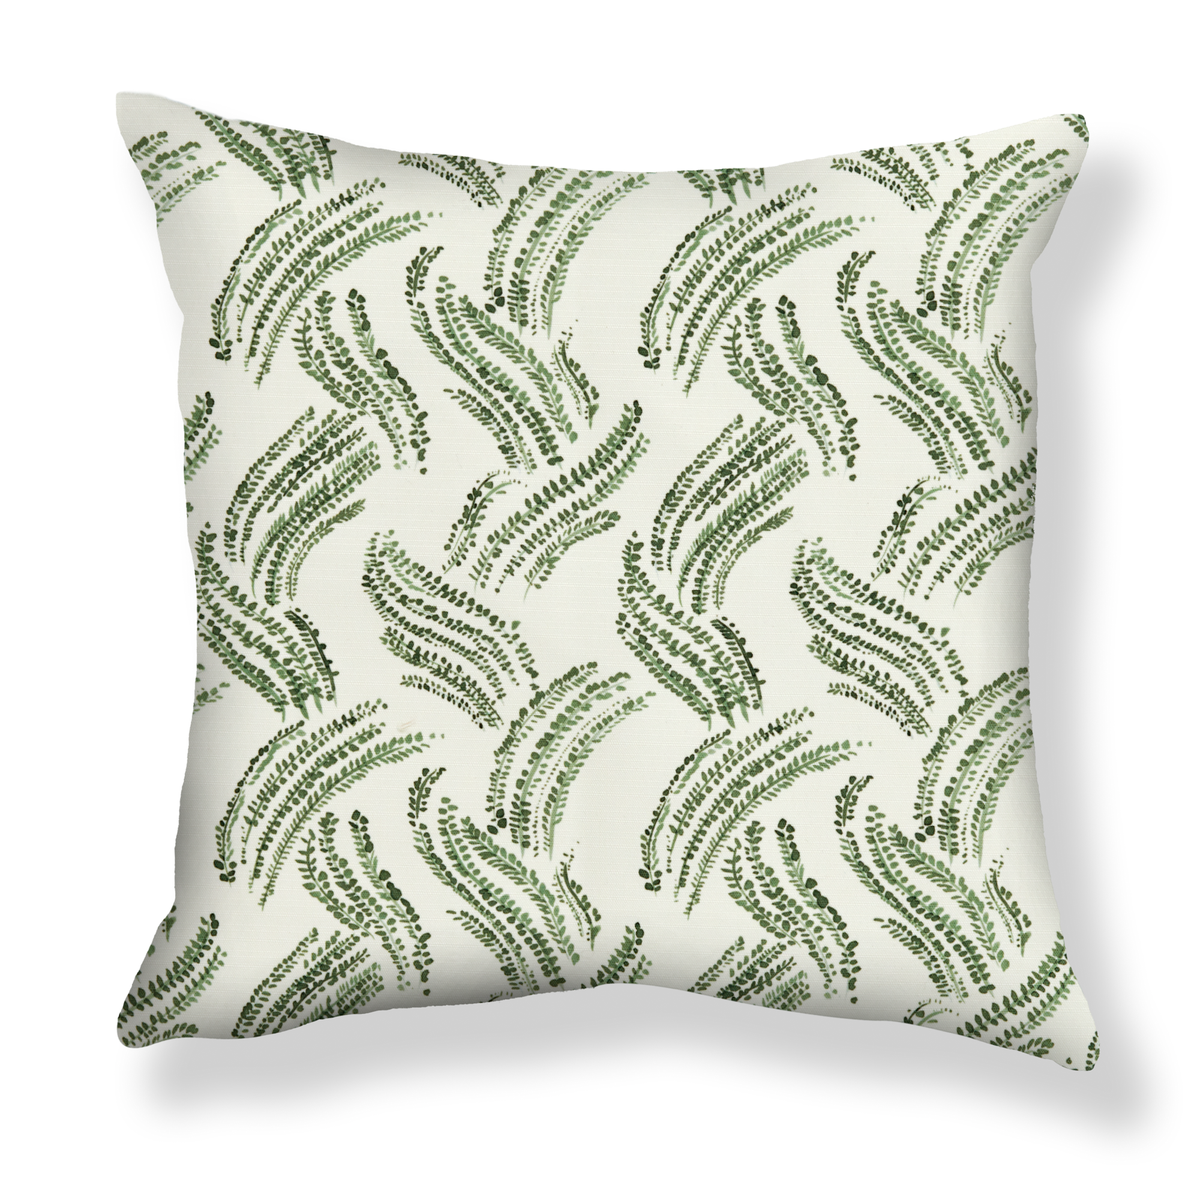 Wavy Grass Pillow in Leafy Green